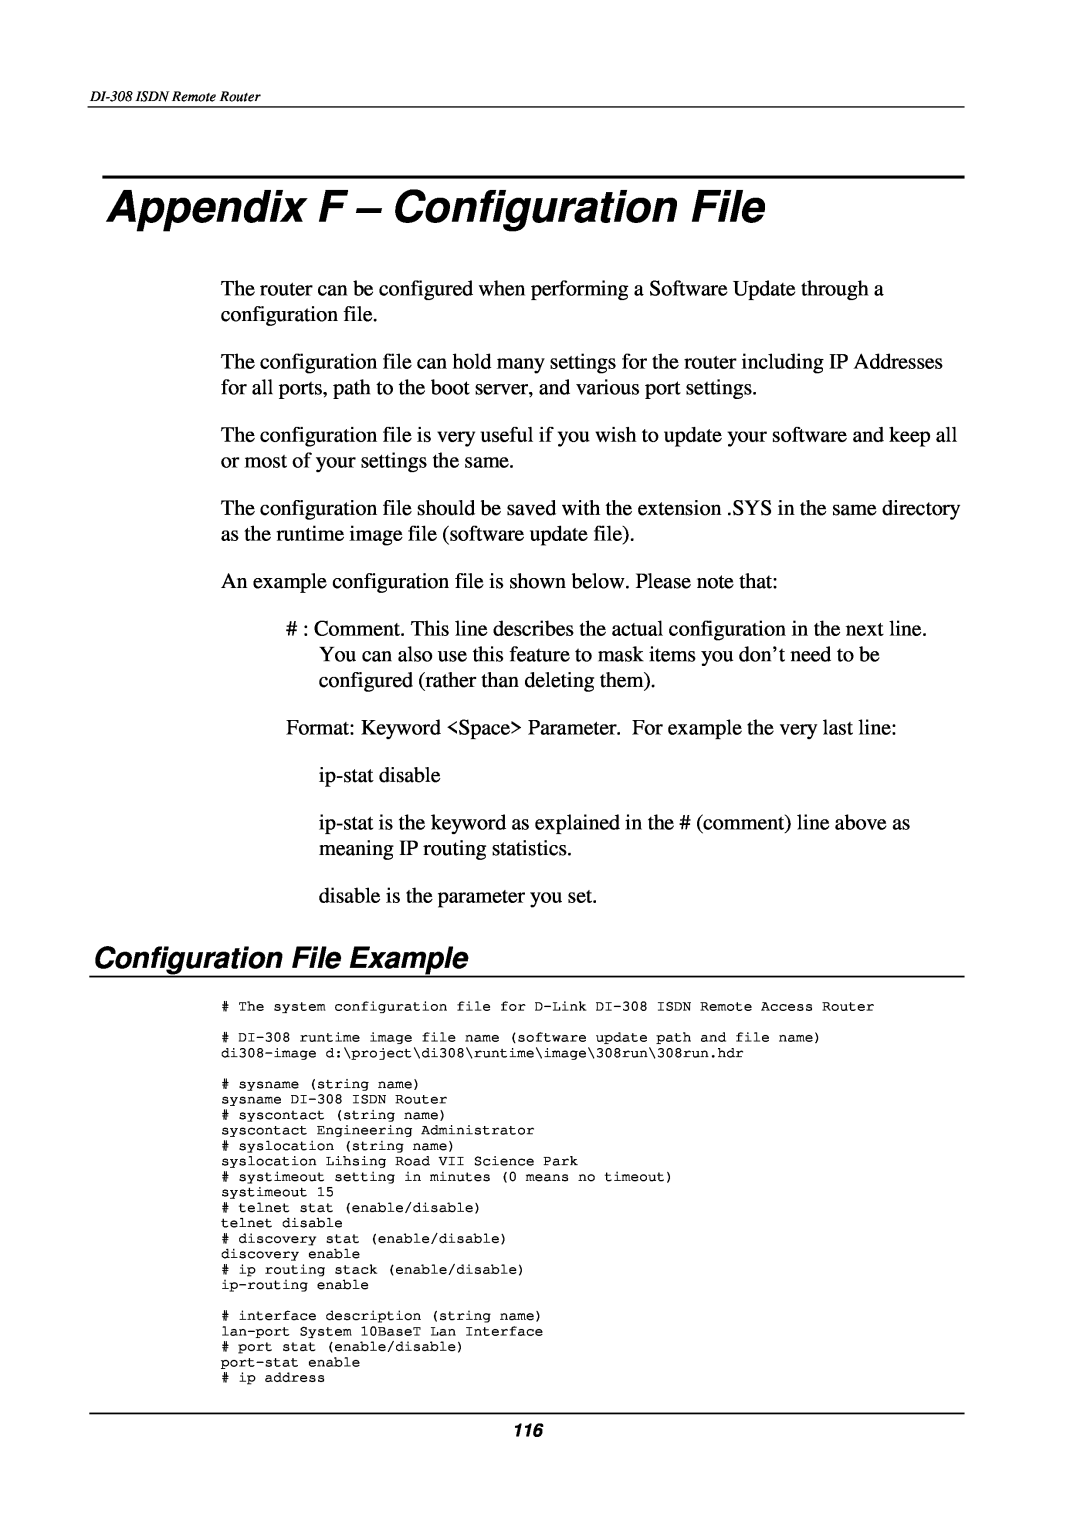 D-Link DI-308 manual Appendix F - Configuration File, Configuration File Example 